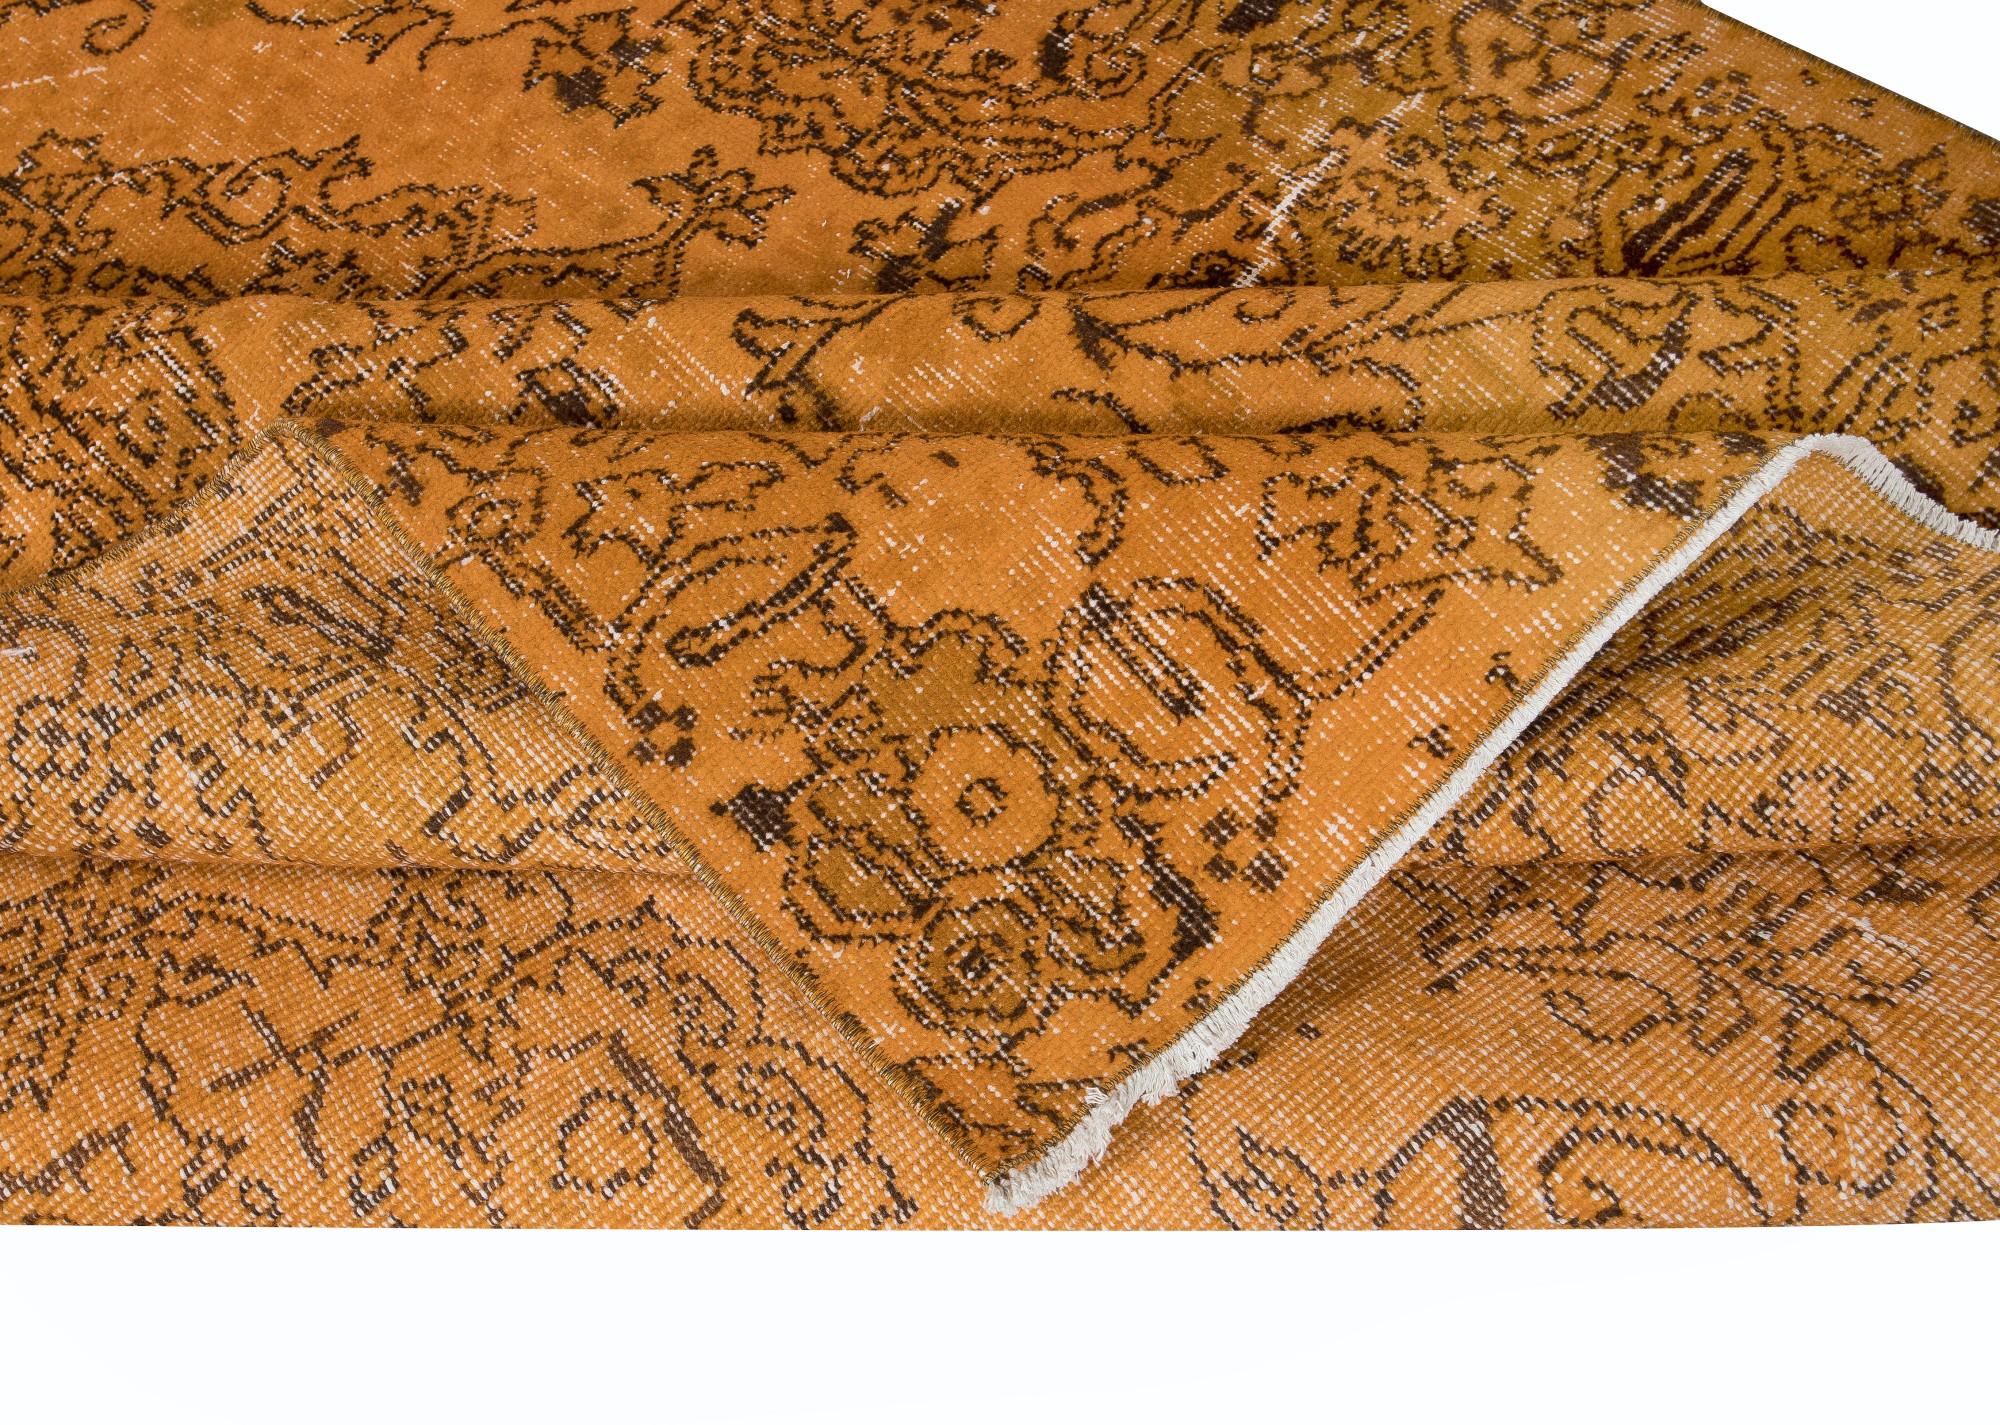 Hand-Knotted 5.2x8.4 Ft Handmade Orange Area Rug from Turkey, Modern Medallion Design Carpet For Sale